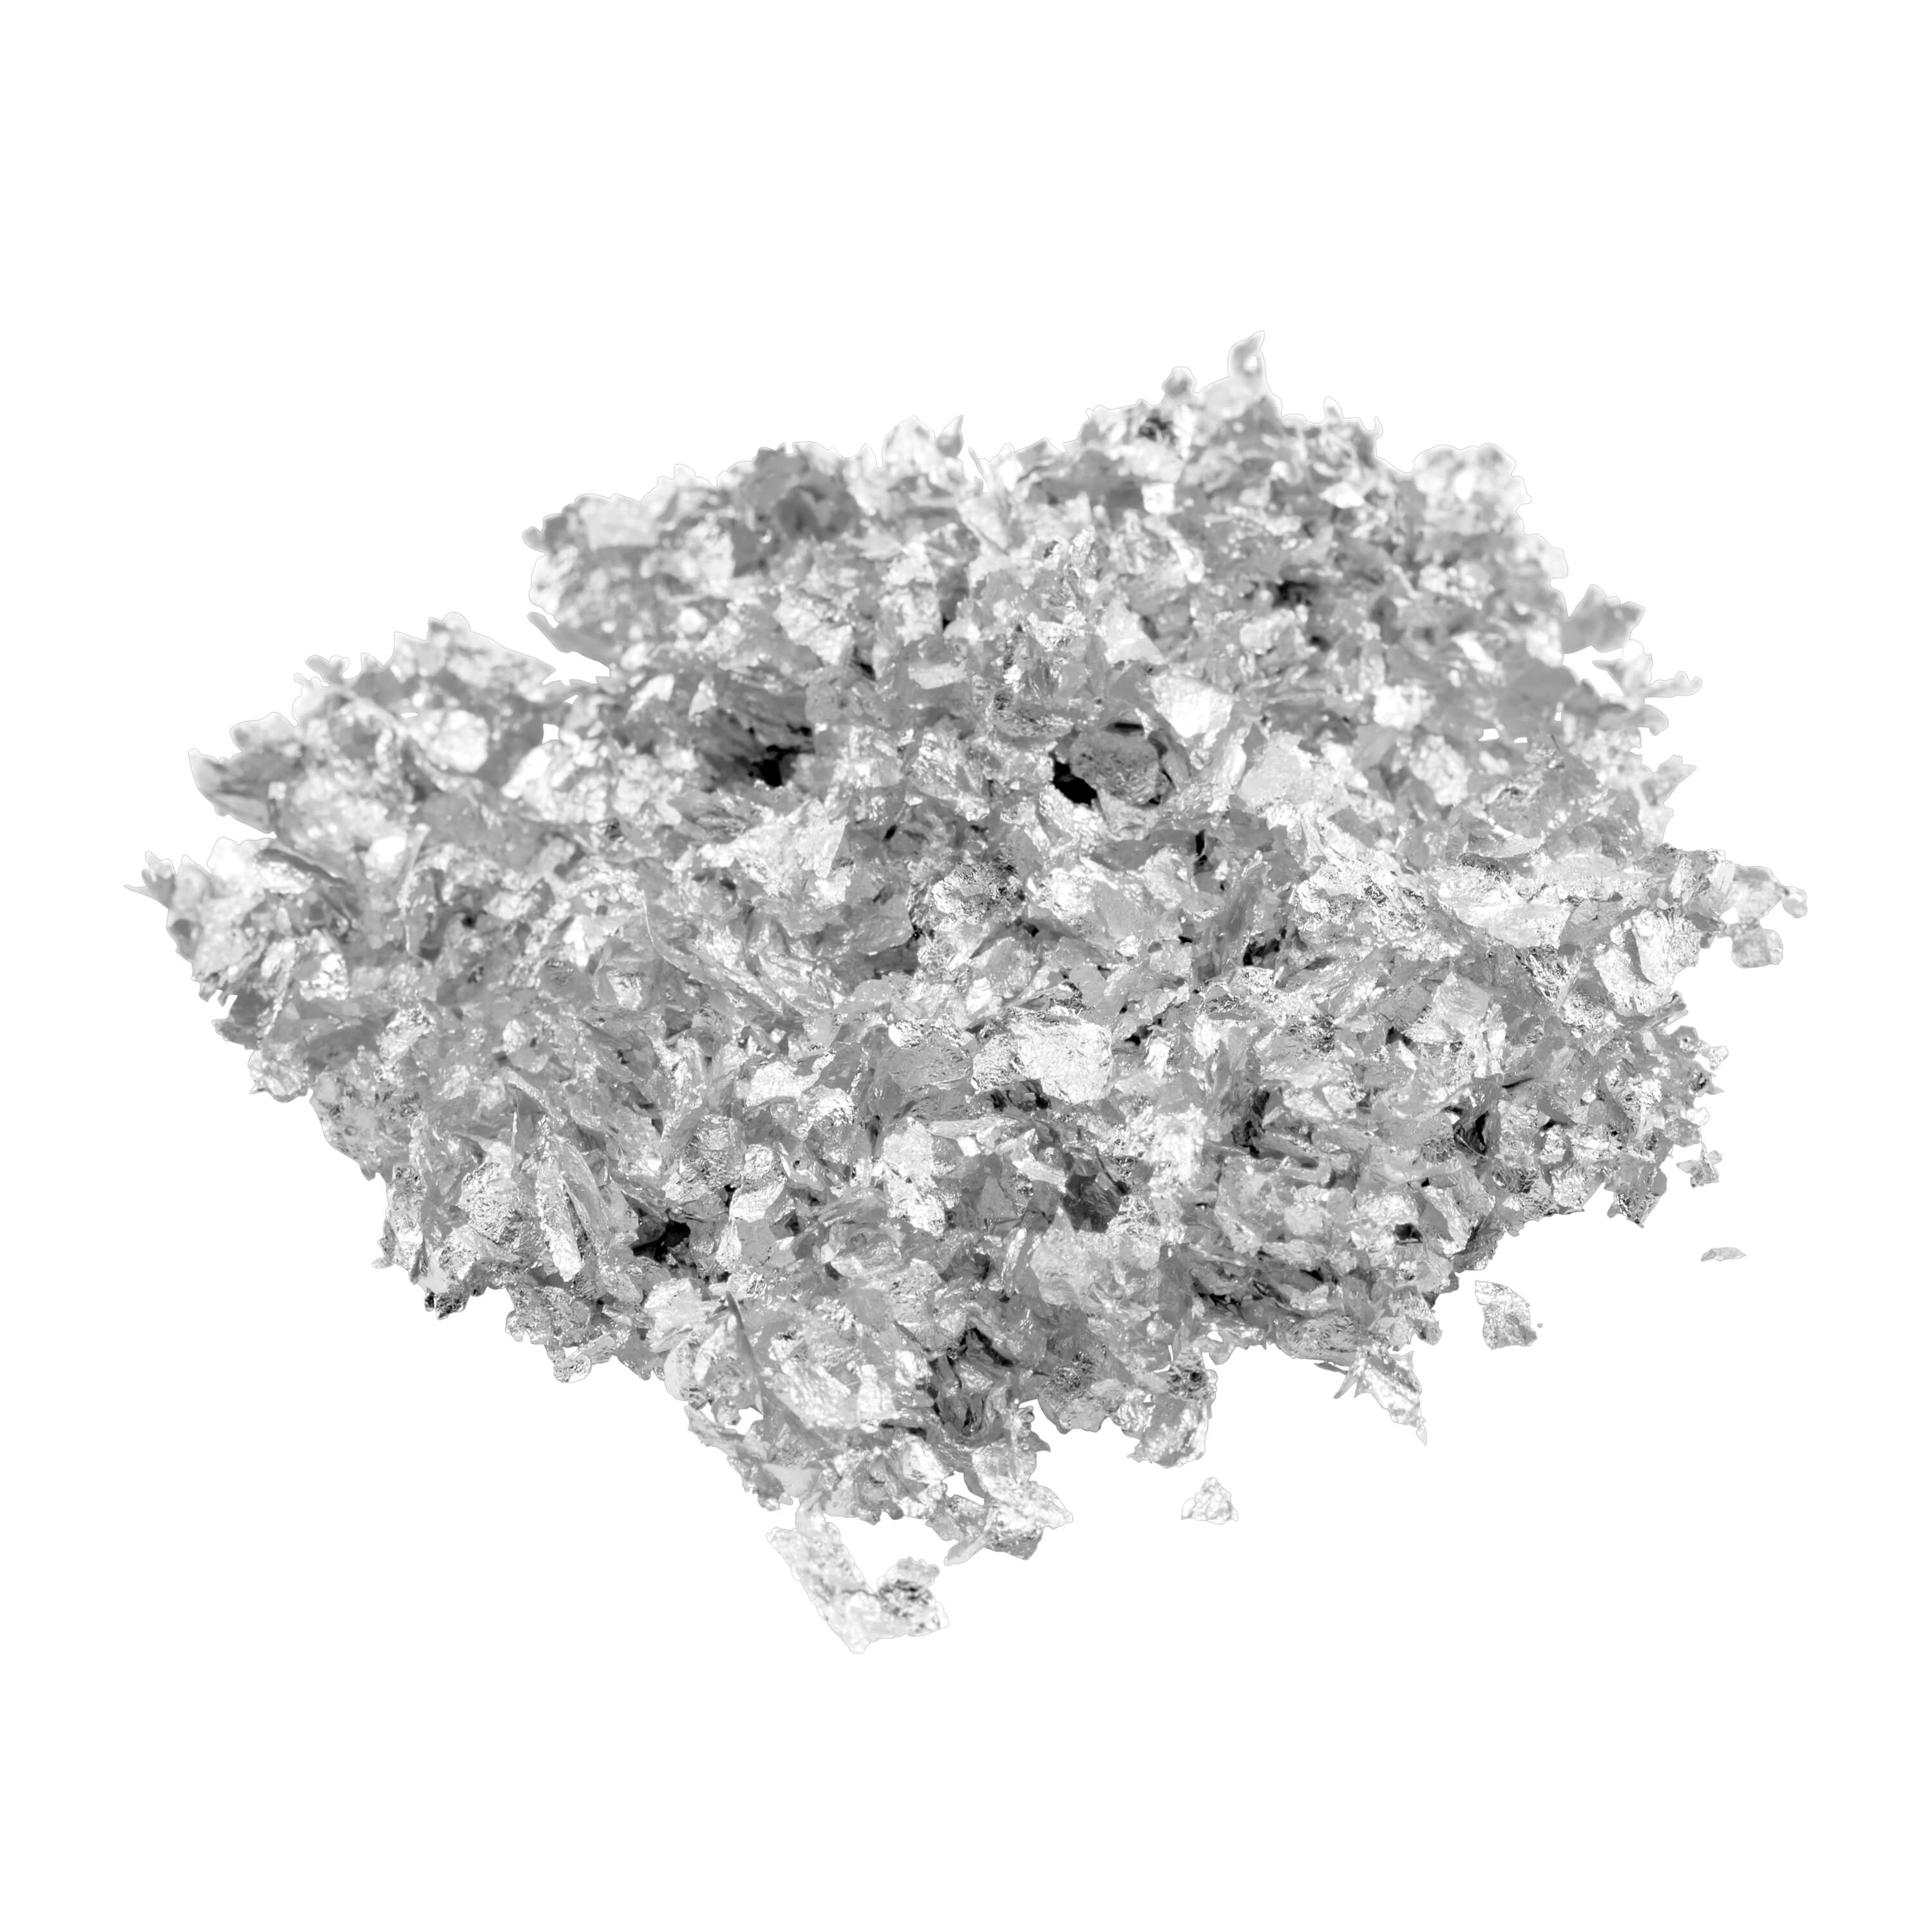 Edible Silver Powder – CornucAupia Gold Leaf Manufacturing, Inc.